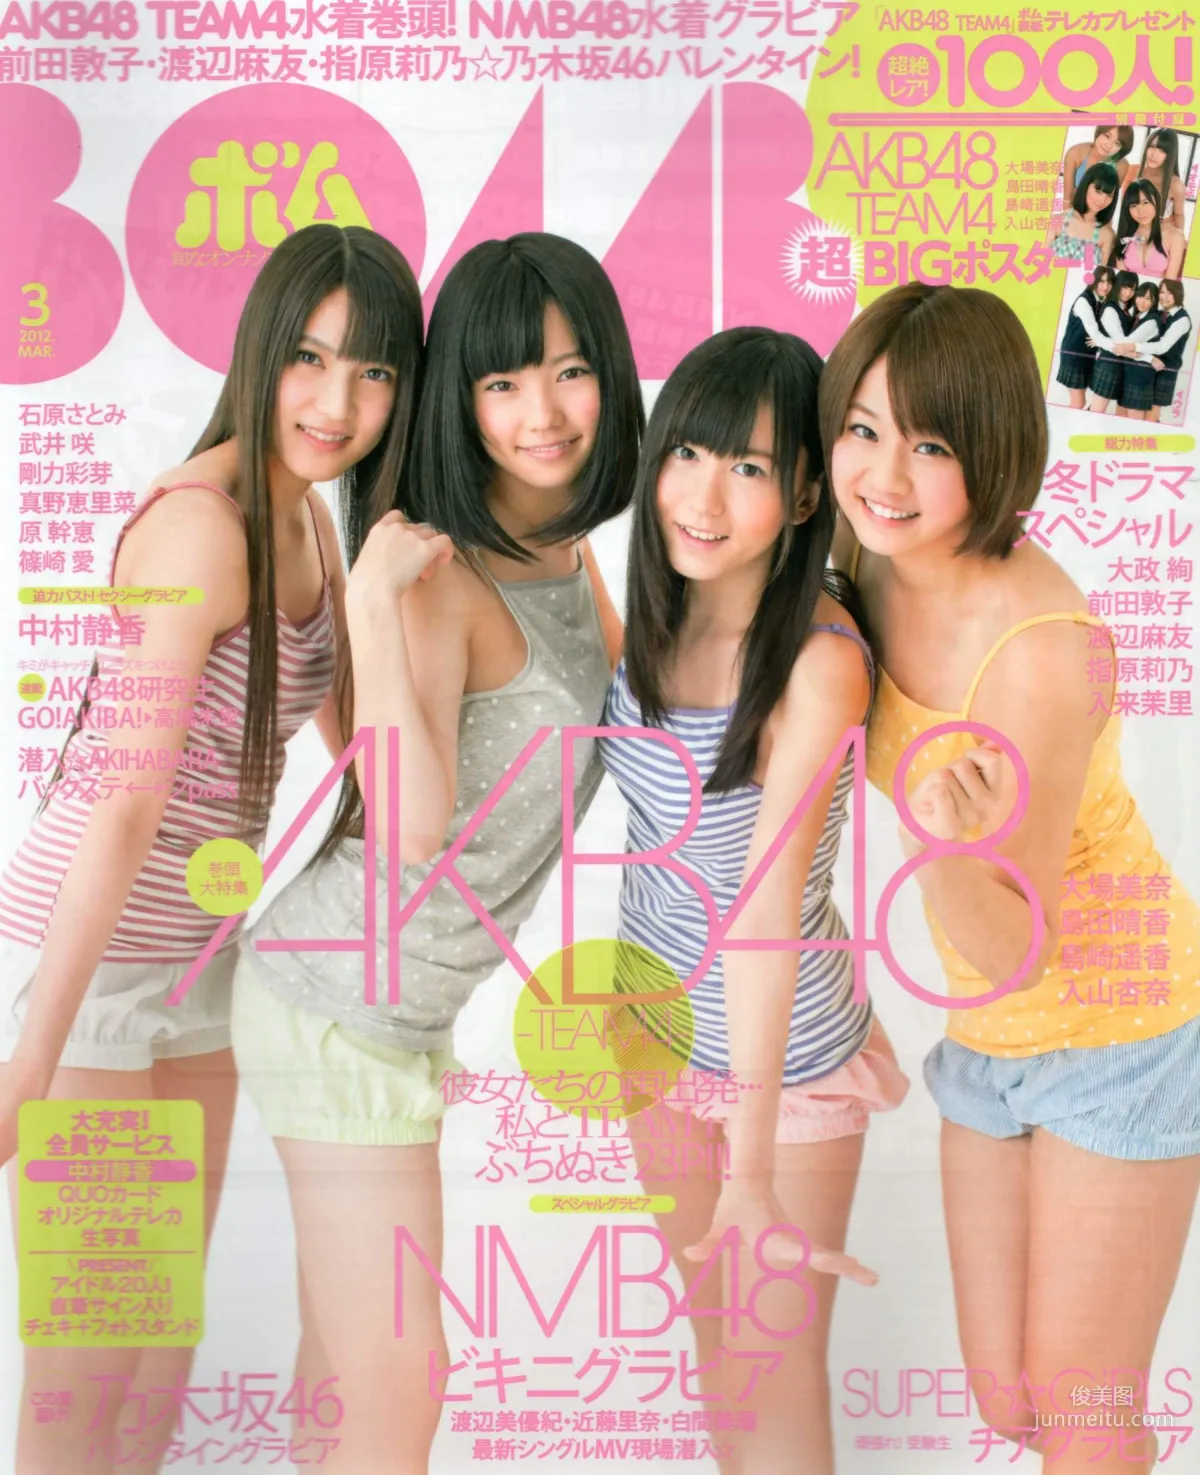 [Bomb Magazine] 2012年No.03 AKB48(Team4) NMB48 前田敦子 渡邊麻友 SUPER☆GiRLS 石原里美 剛力彩芽 篠崎愛 写真杂志1